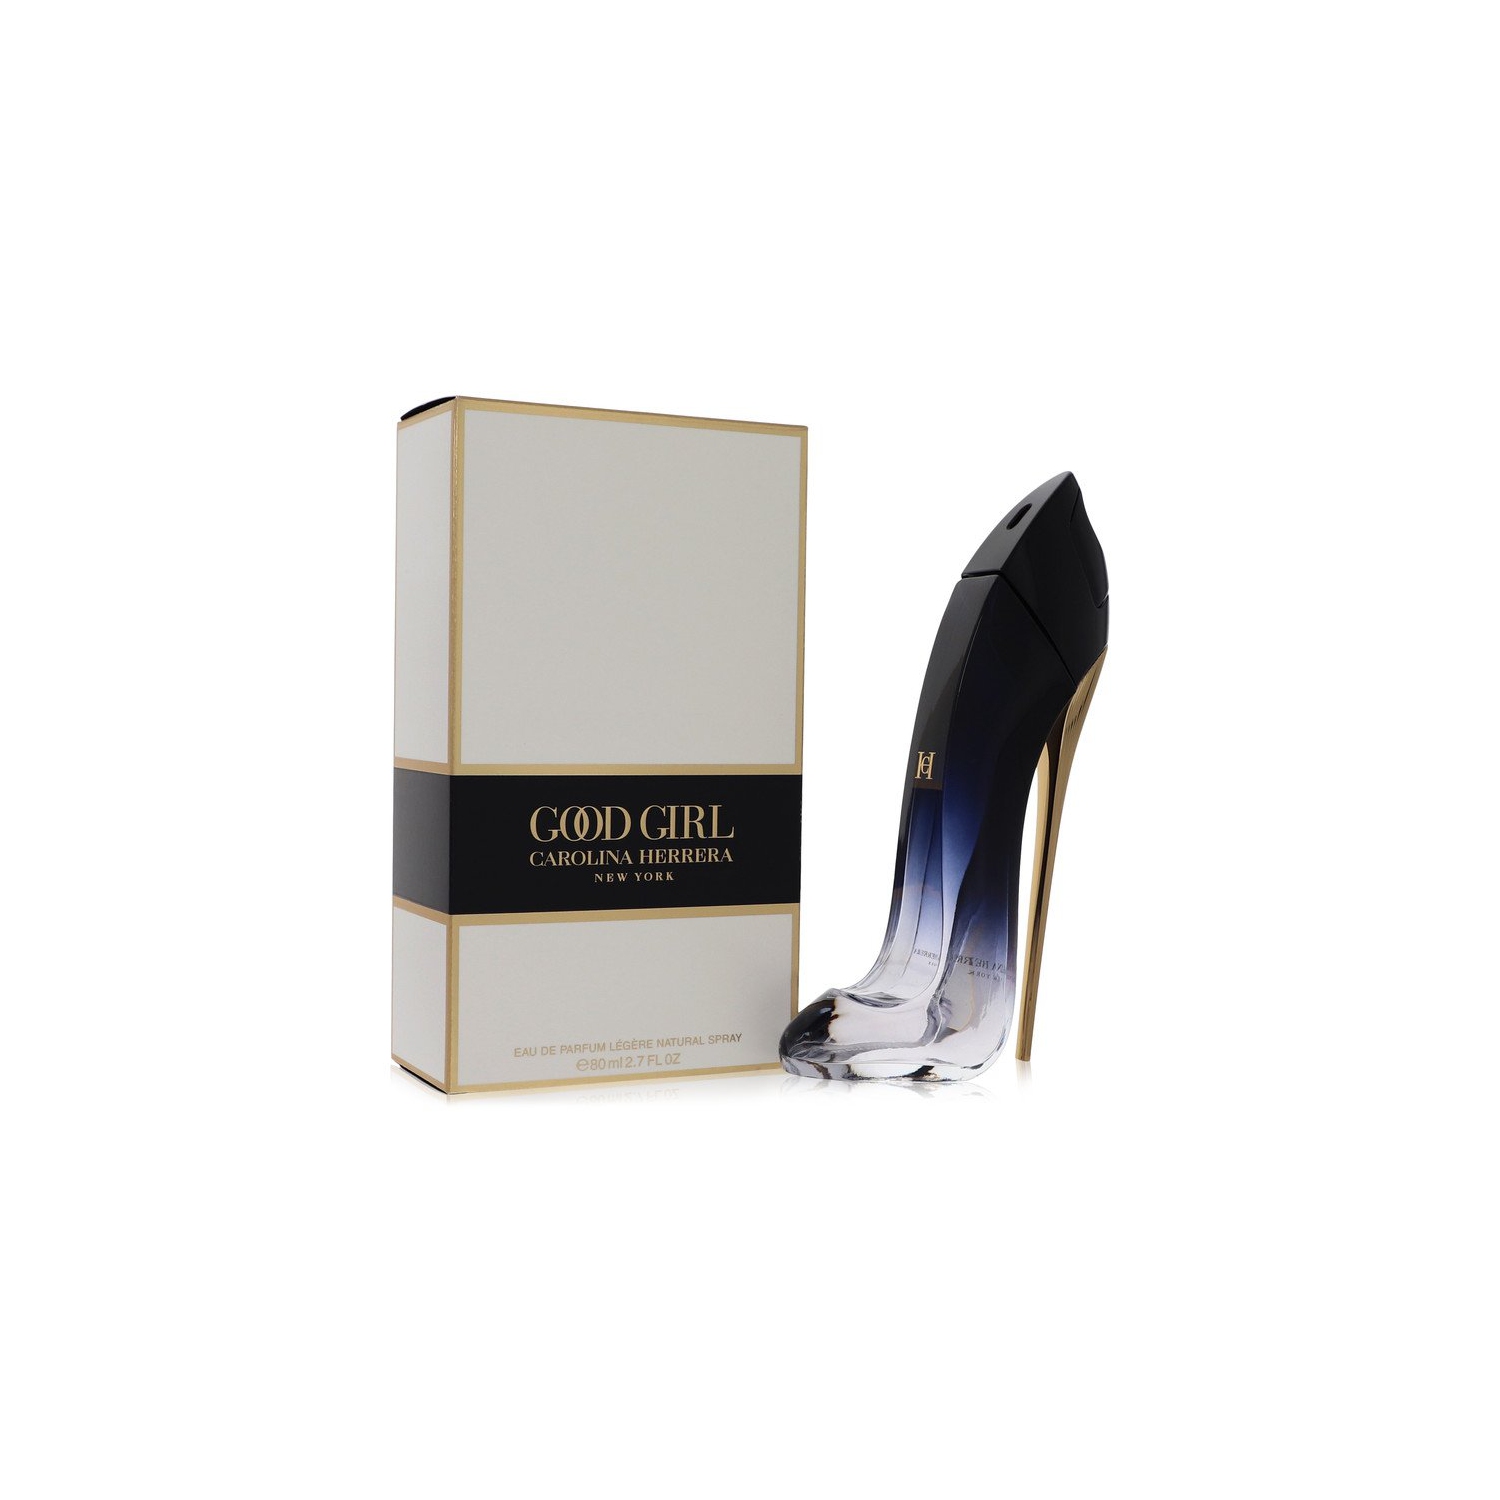 Good Girl Legere by Carolina Herrera Eau De Parfum Legere Spray 2.7 oz for Women